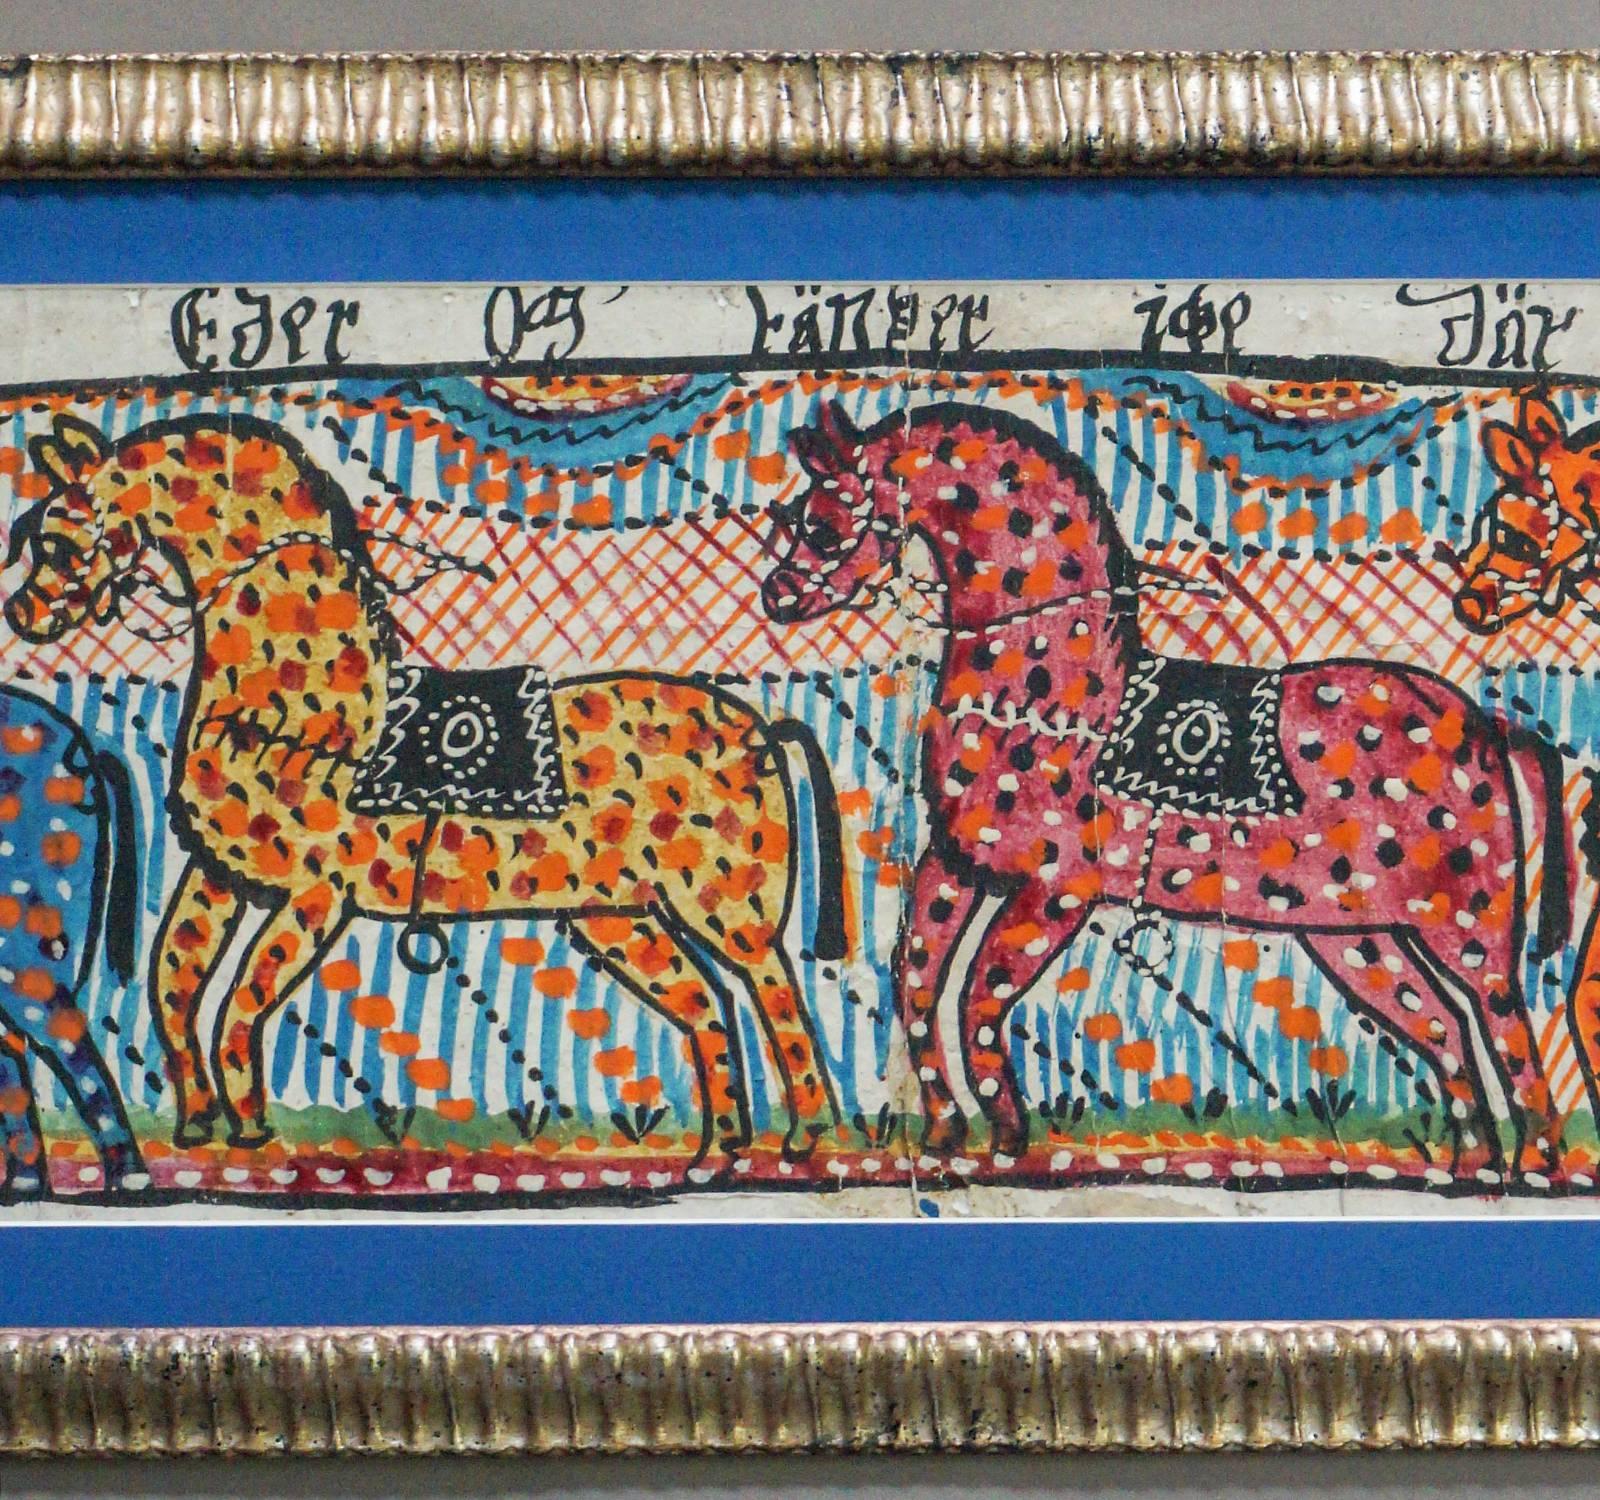 Primitive Swedish Folk Art Painting with Four Horses